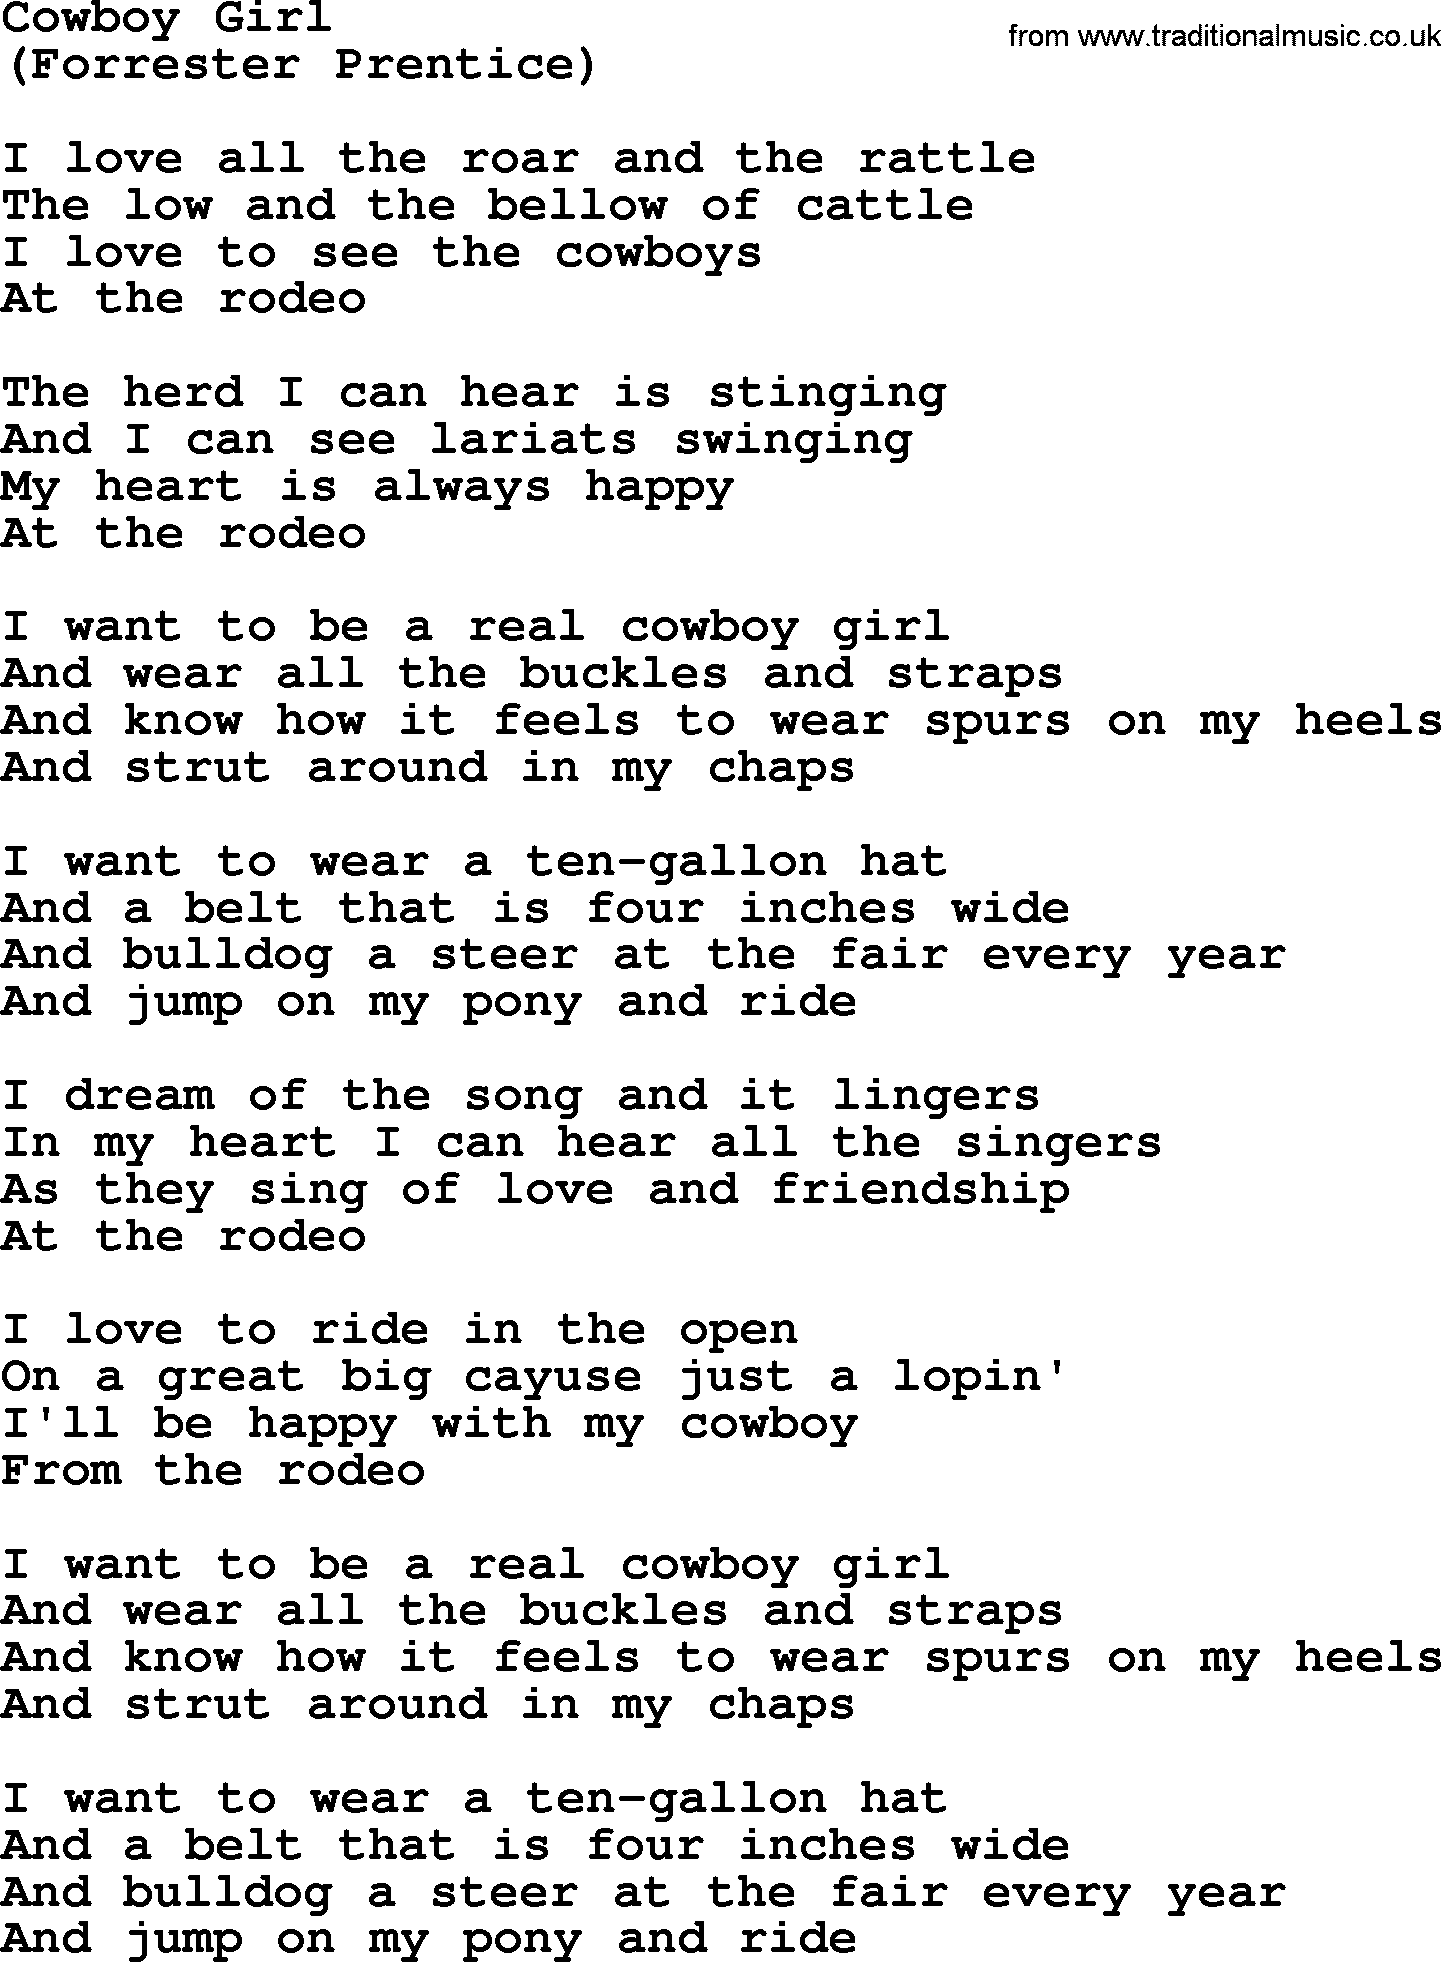 The Byrds song Cowboy Girl, lyrics